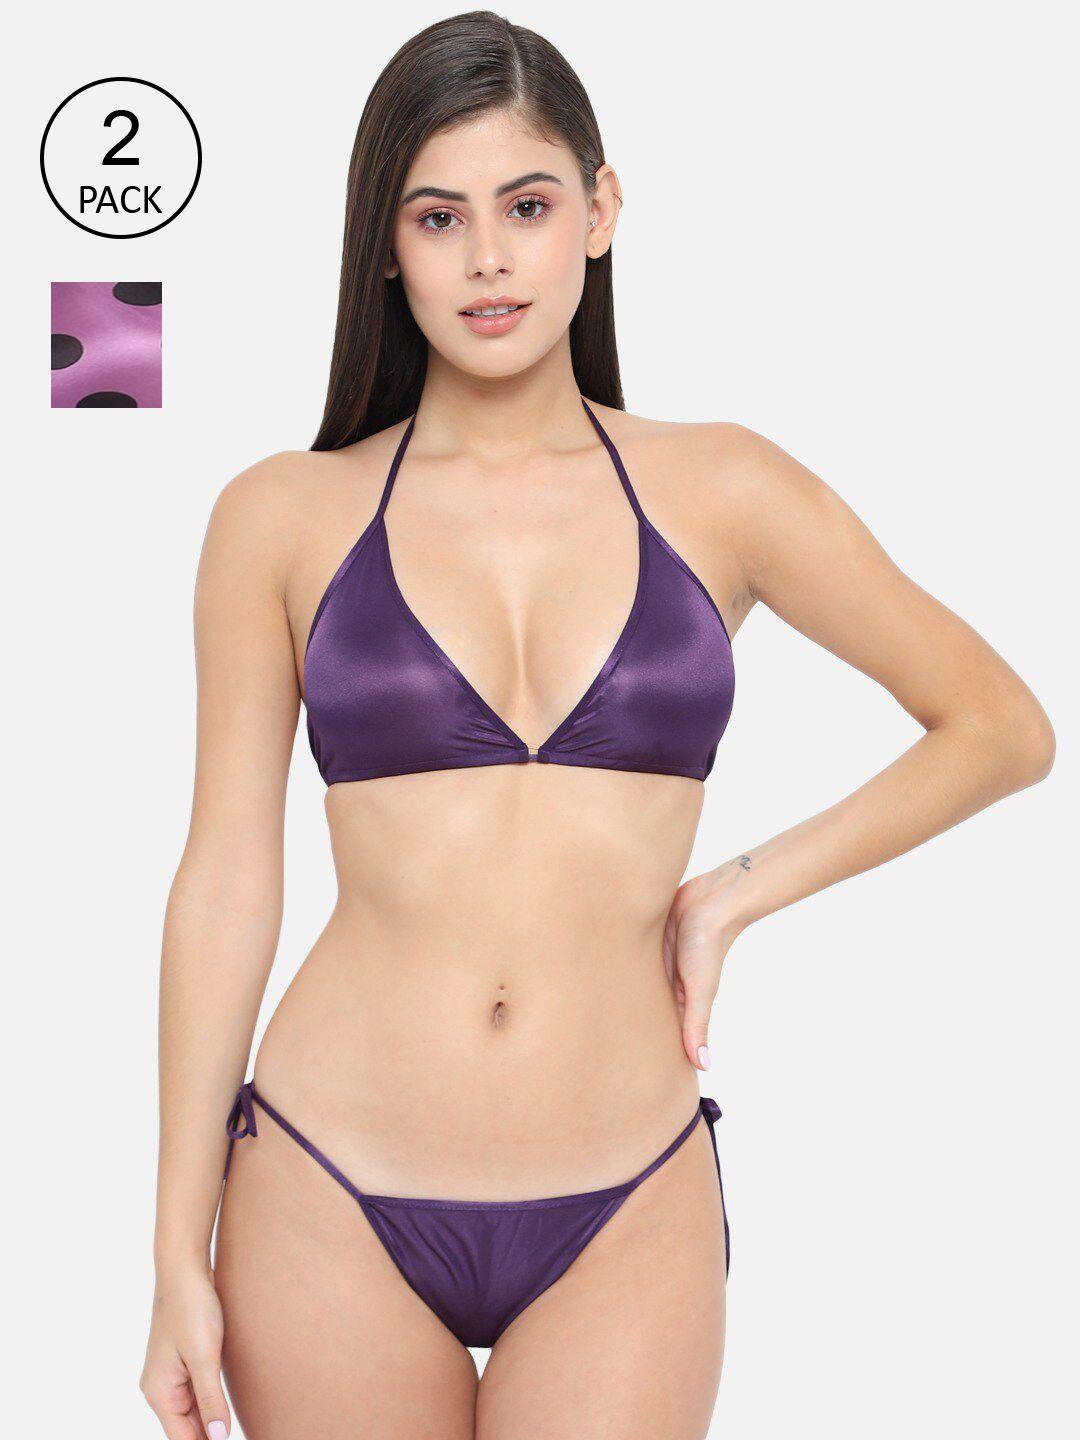 klamotten women pack of 2 purple & black solid lingerie set